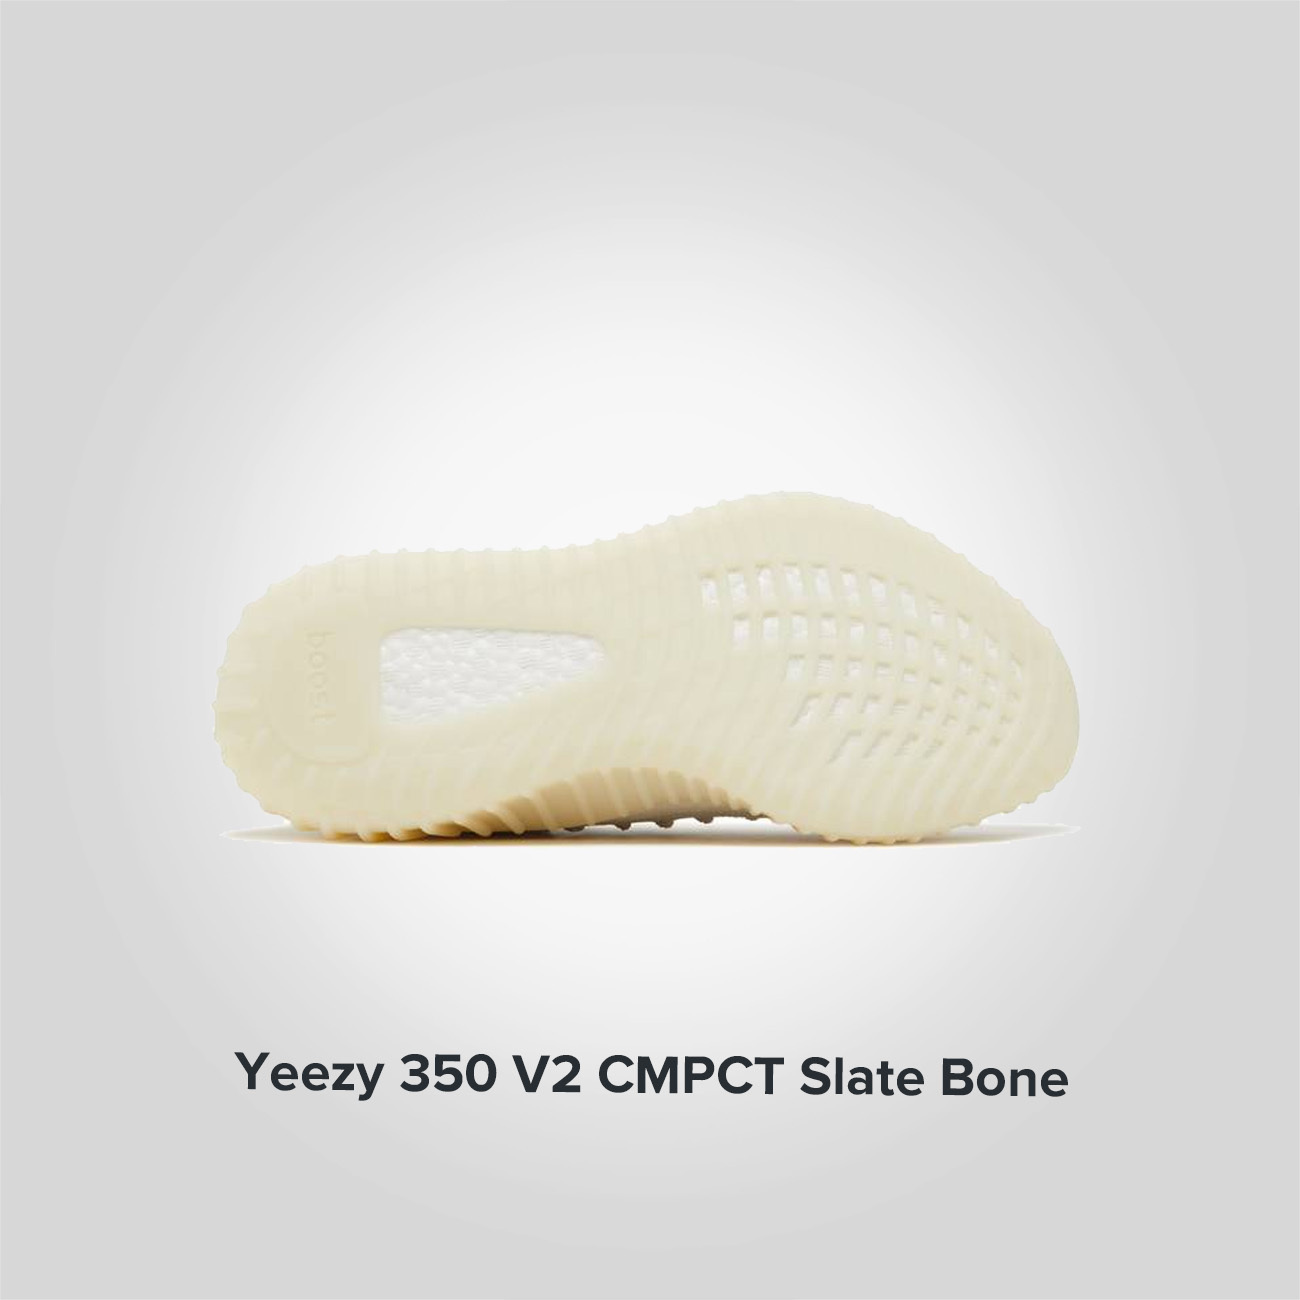 Yeezy 350 V2 CMPCT Slate Bone